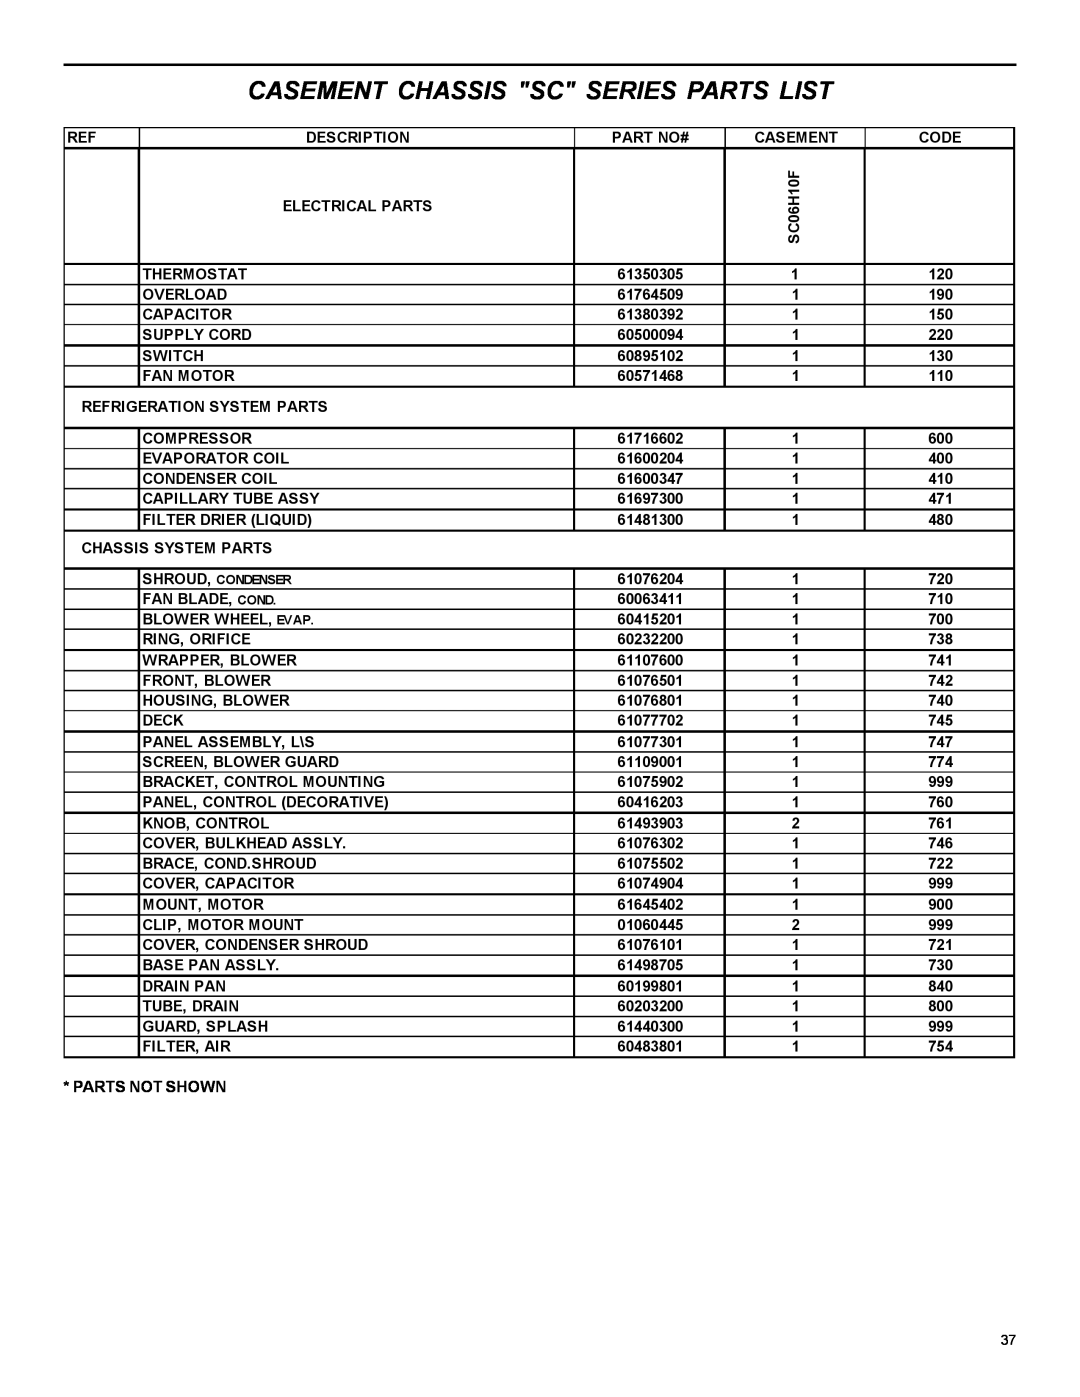 Friedrich 2004 manual Casement Chassis Sc Series Parts List 